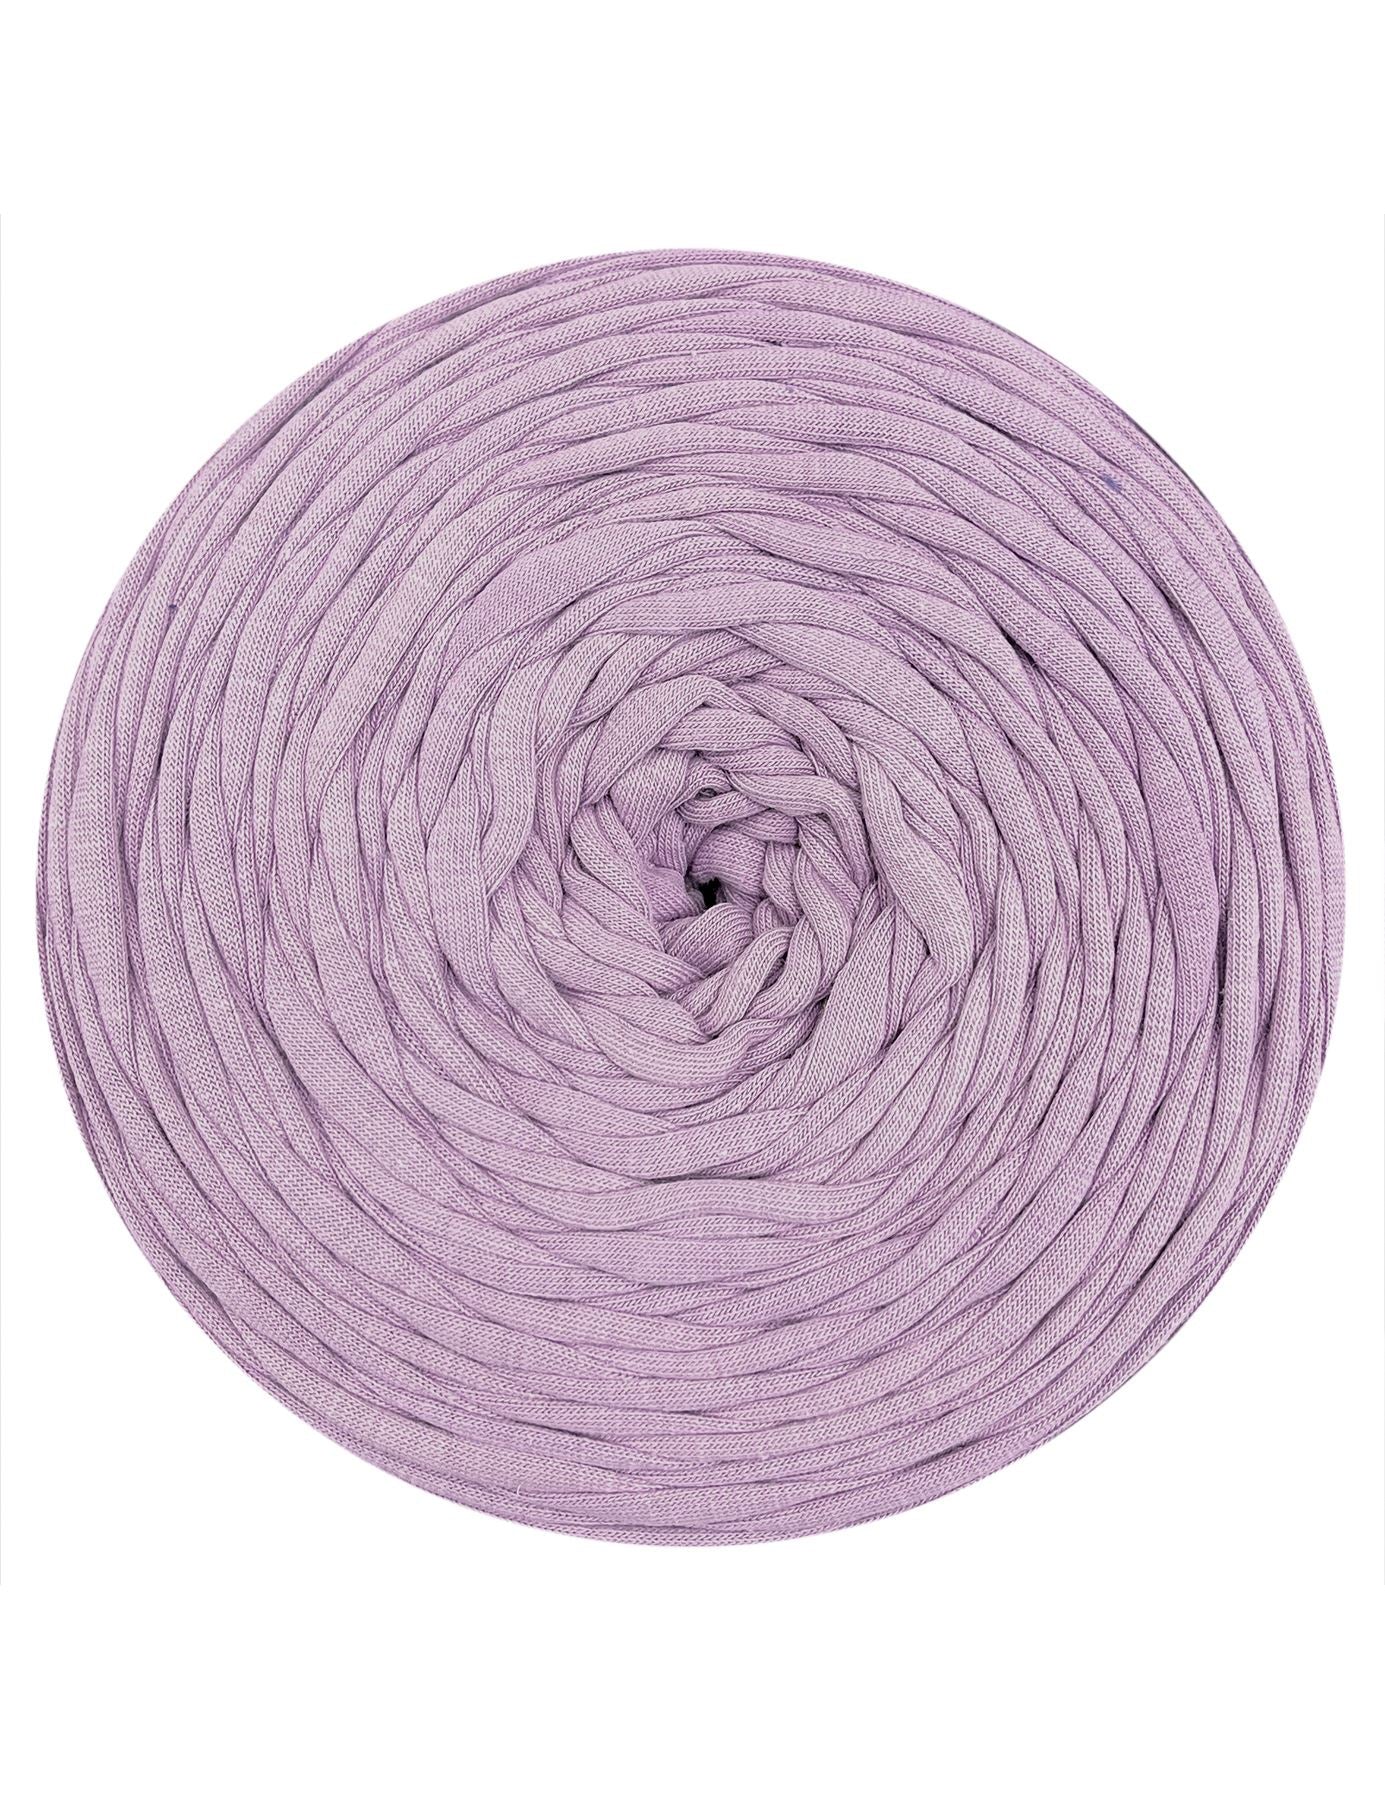 Pale lavendar purple t-shirt yarn (100-120m)